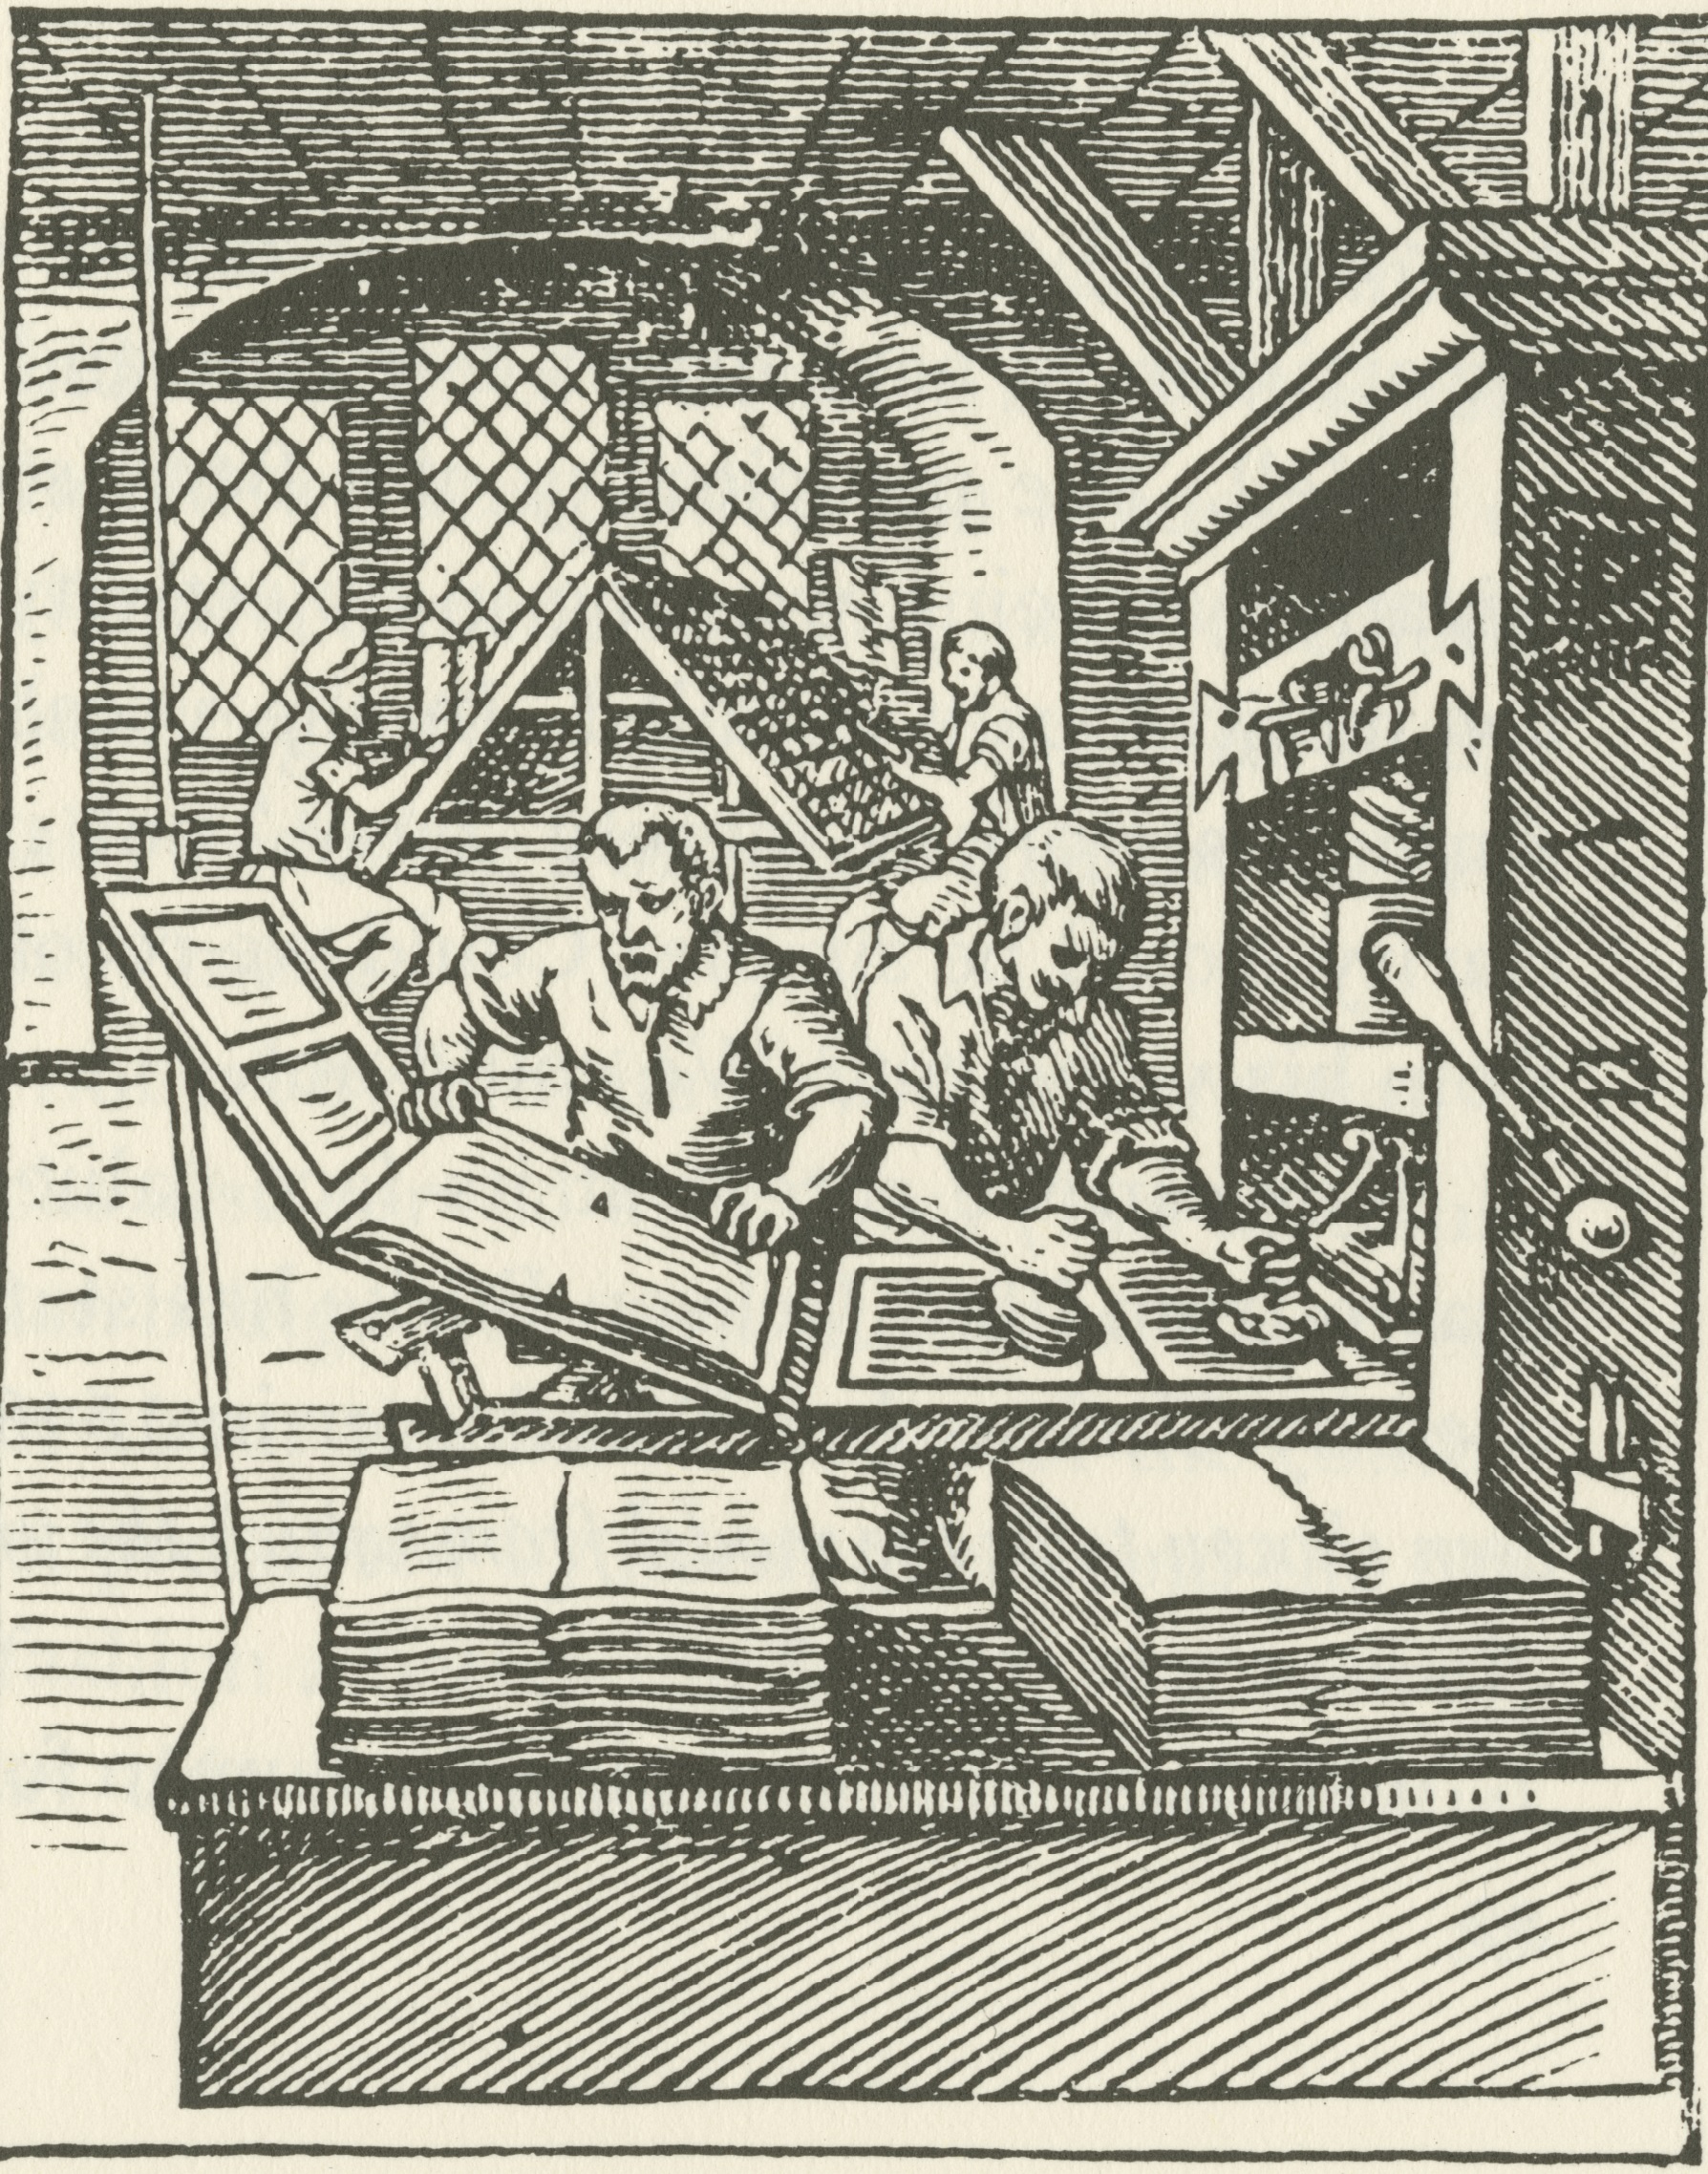 Print illustration of a rare printing press